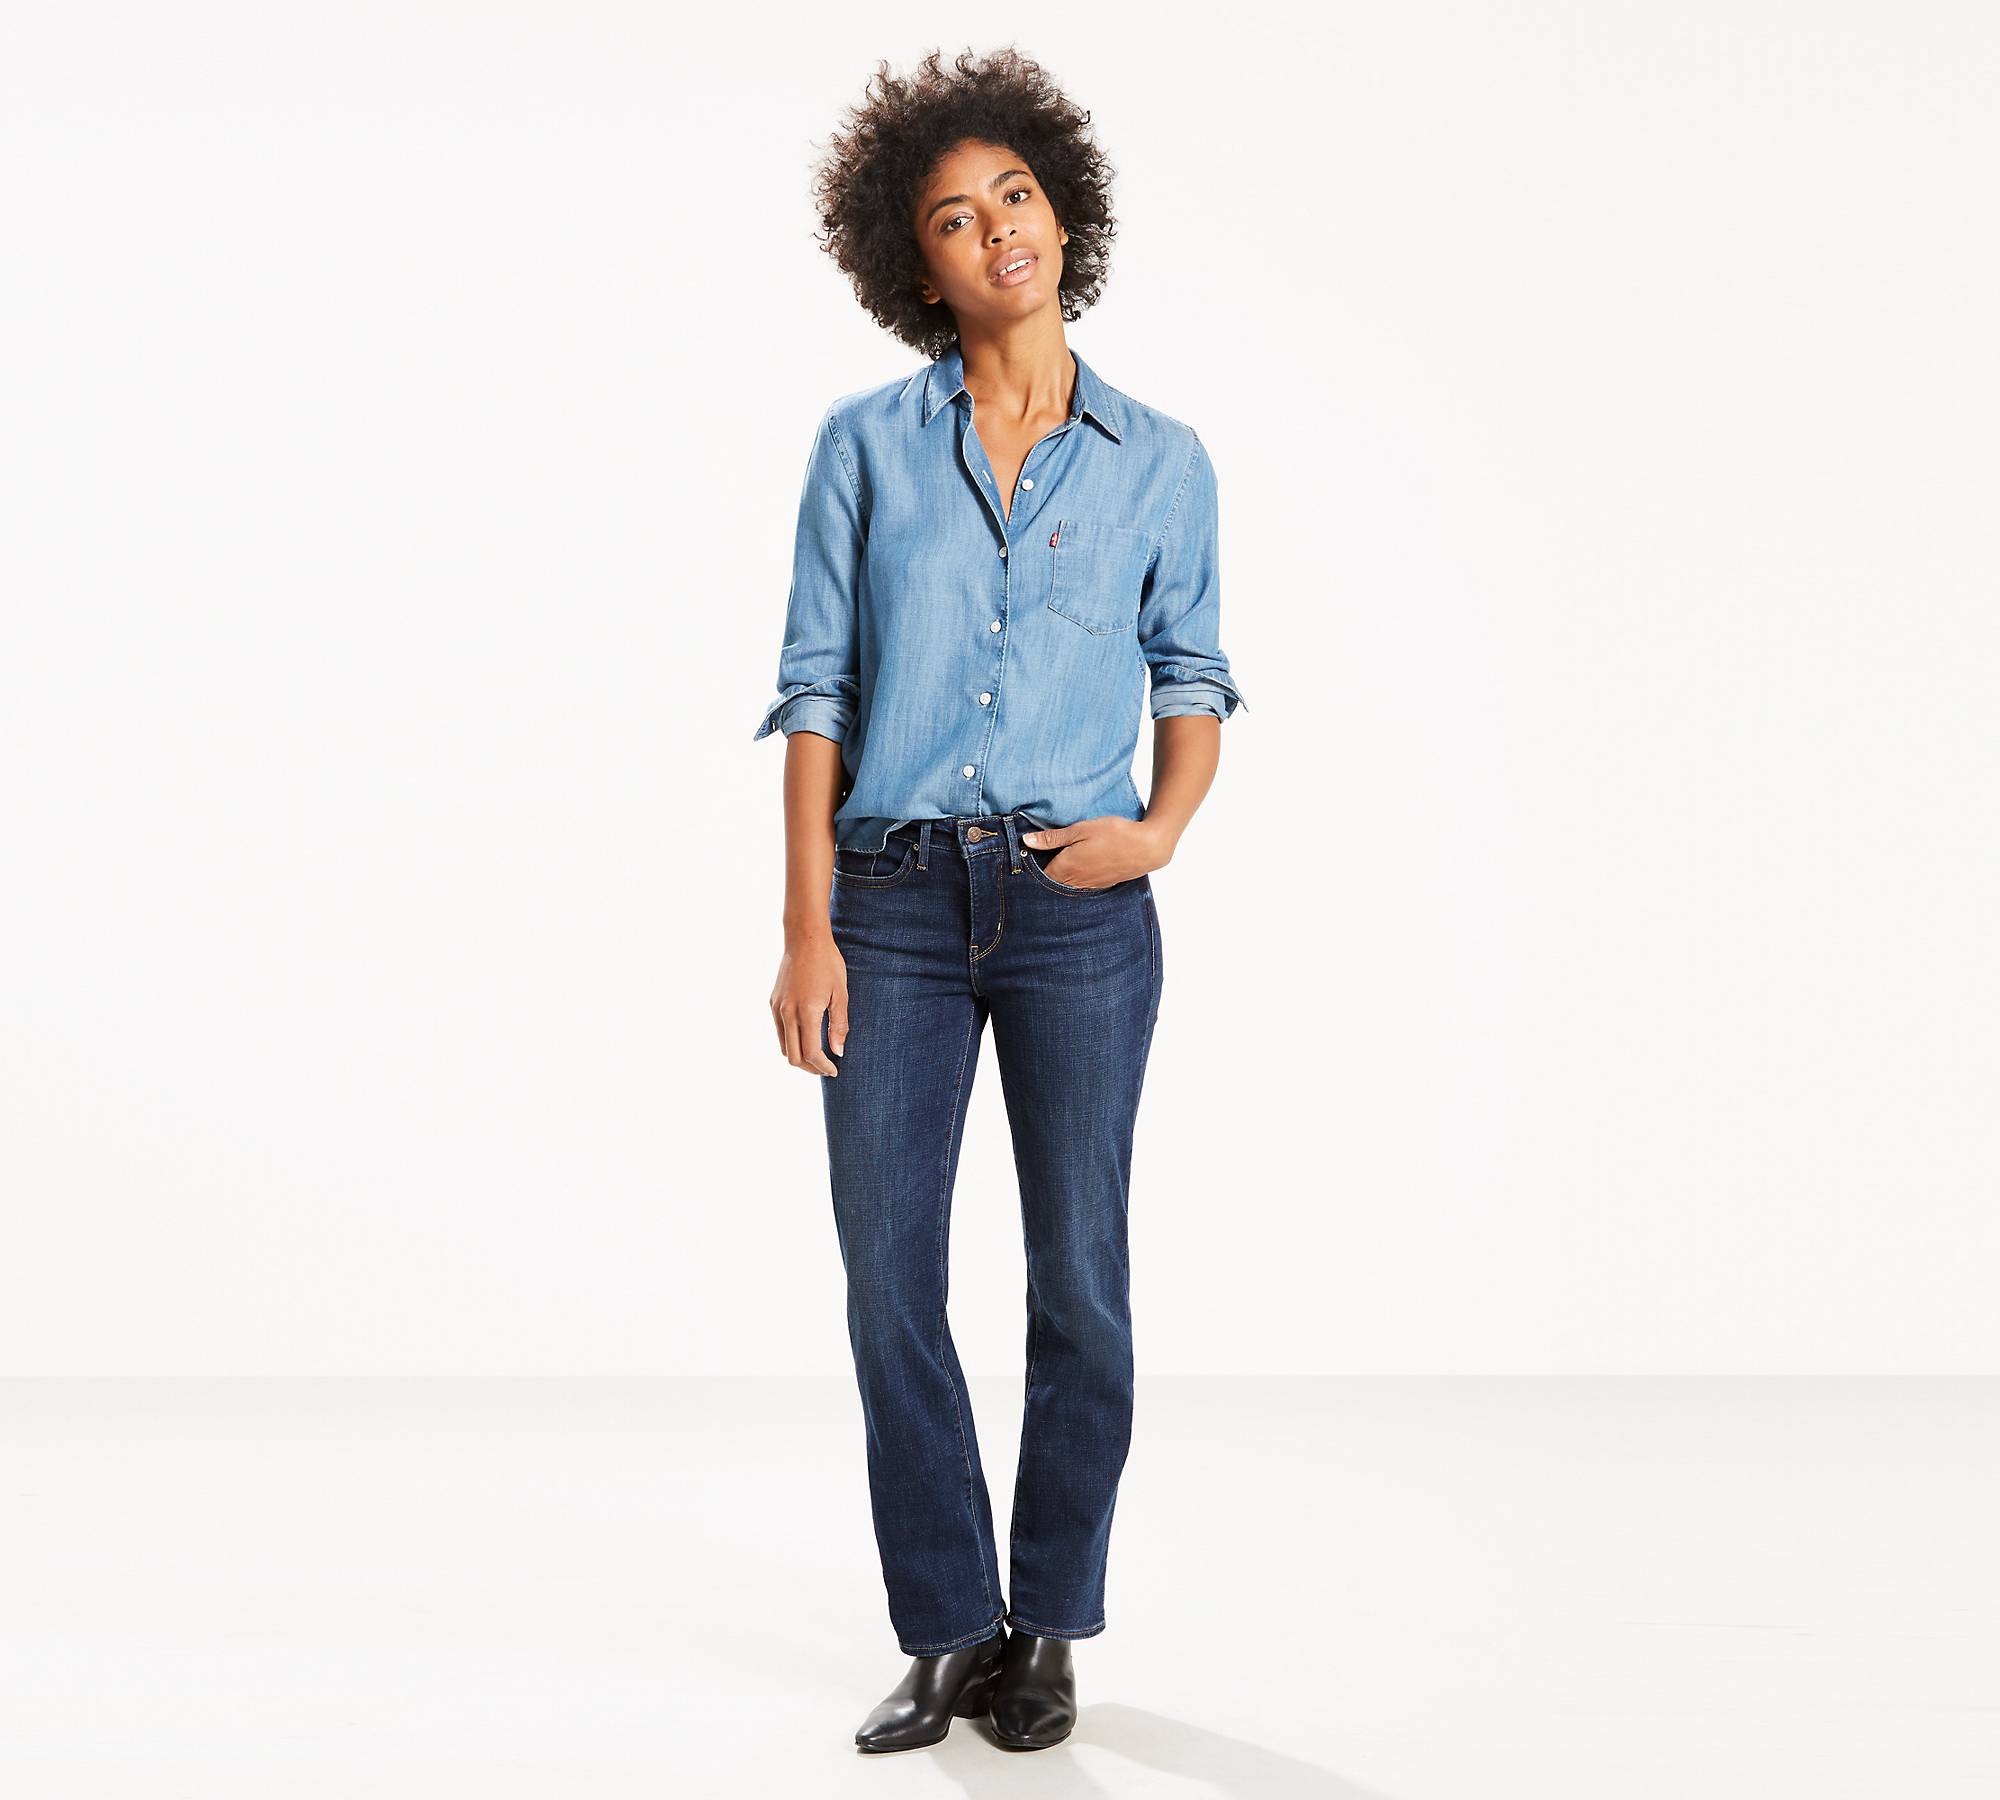 314 Shaping Straight Women's Jeans - Dark Wash | Levi's® US